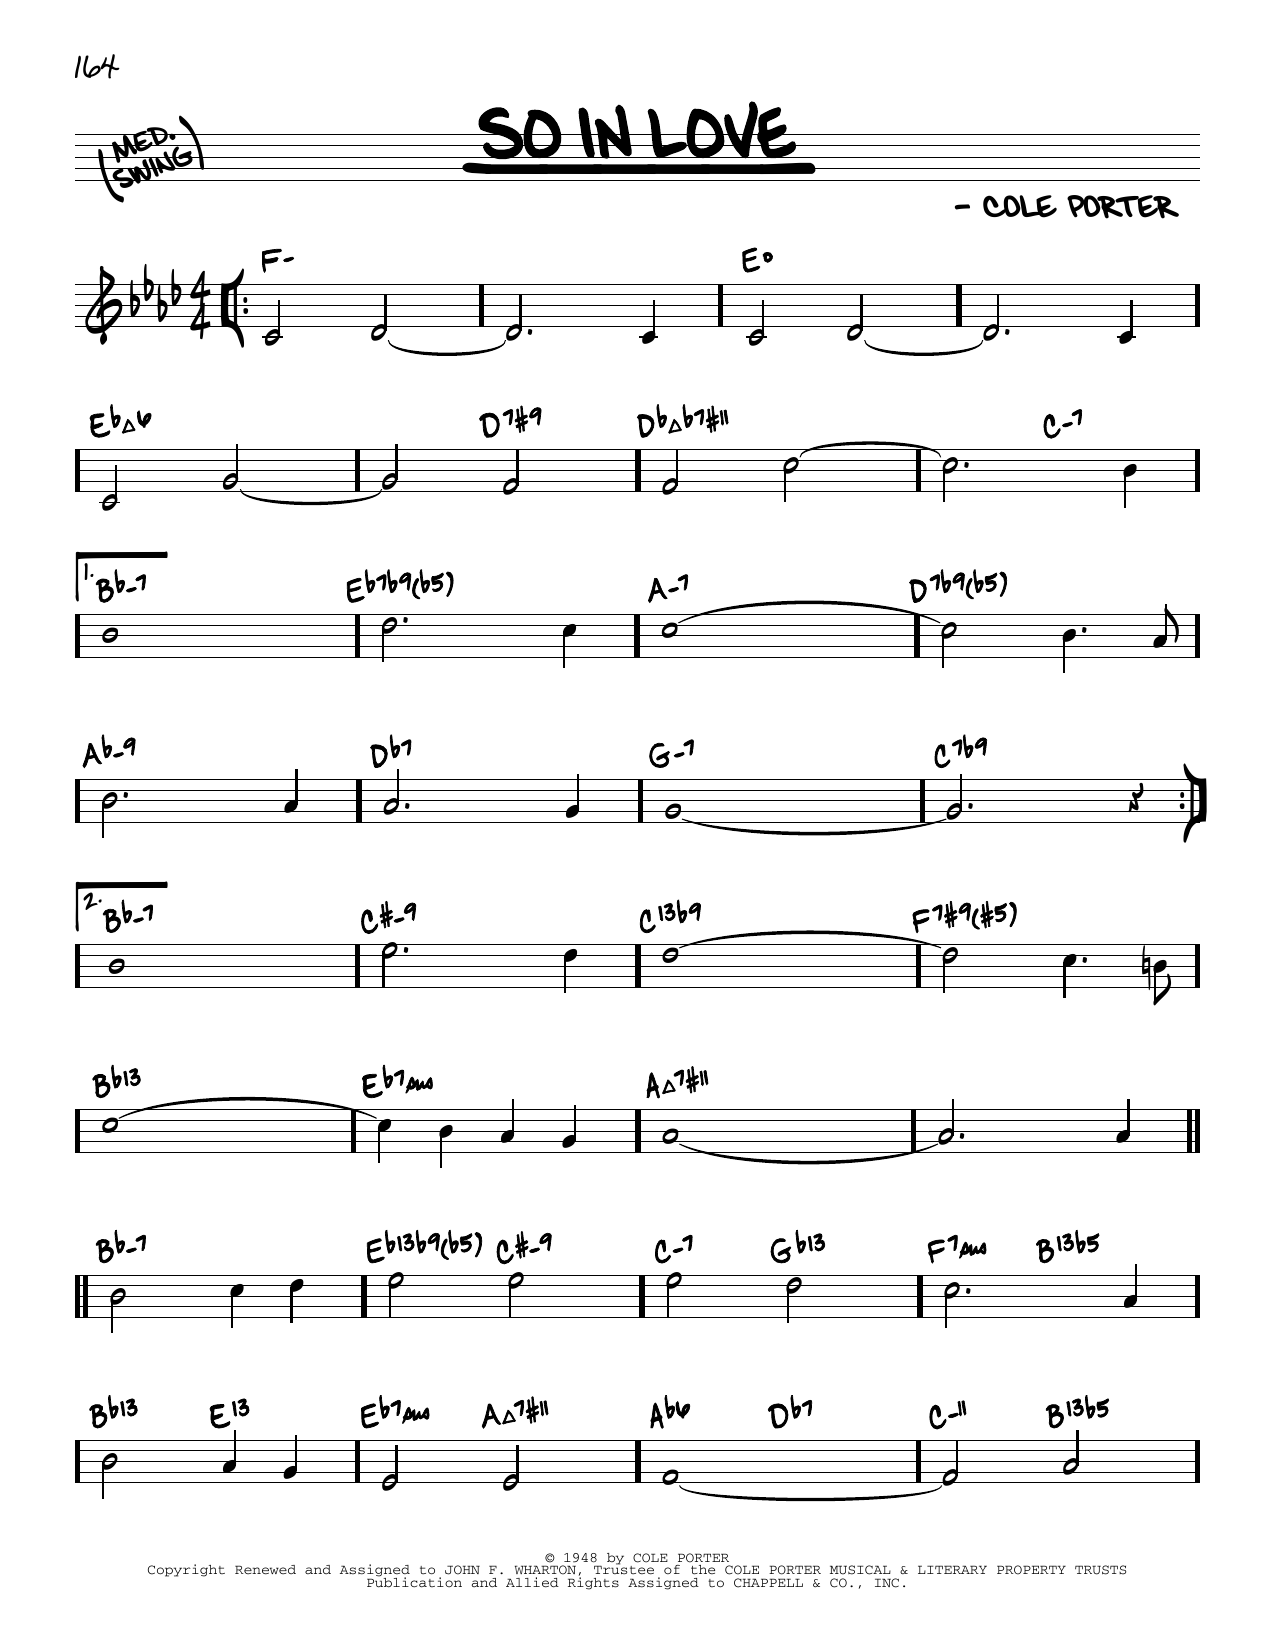 Cole Porter So In Love (arr. David Hazeltine) Sheet Music Notes & Chords for Real Book – Enhanced Chords - Download or Print PDF